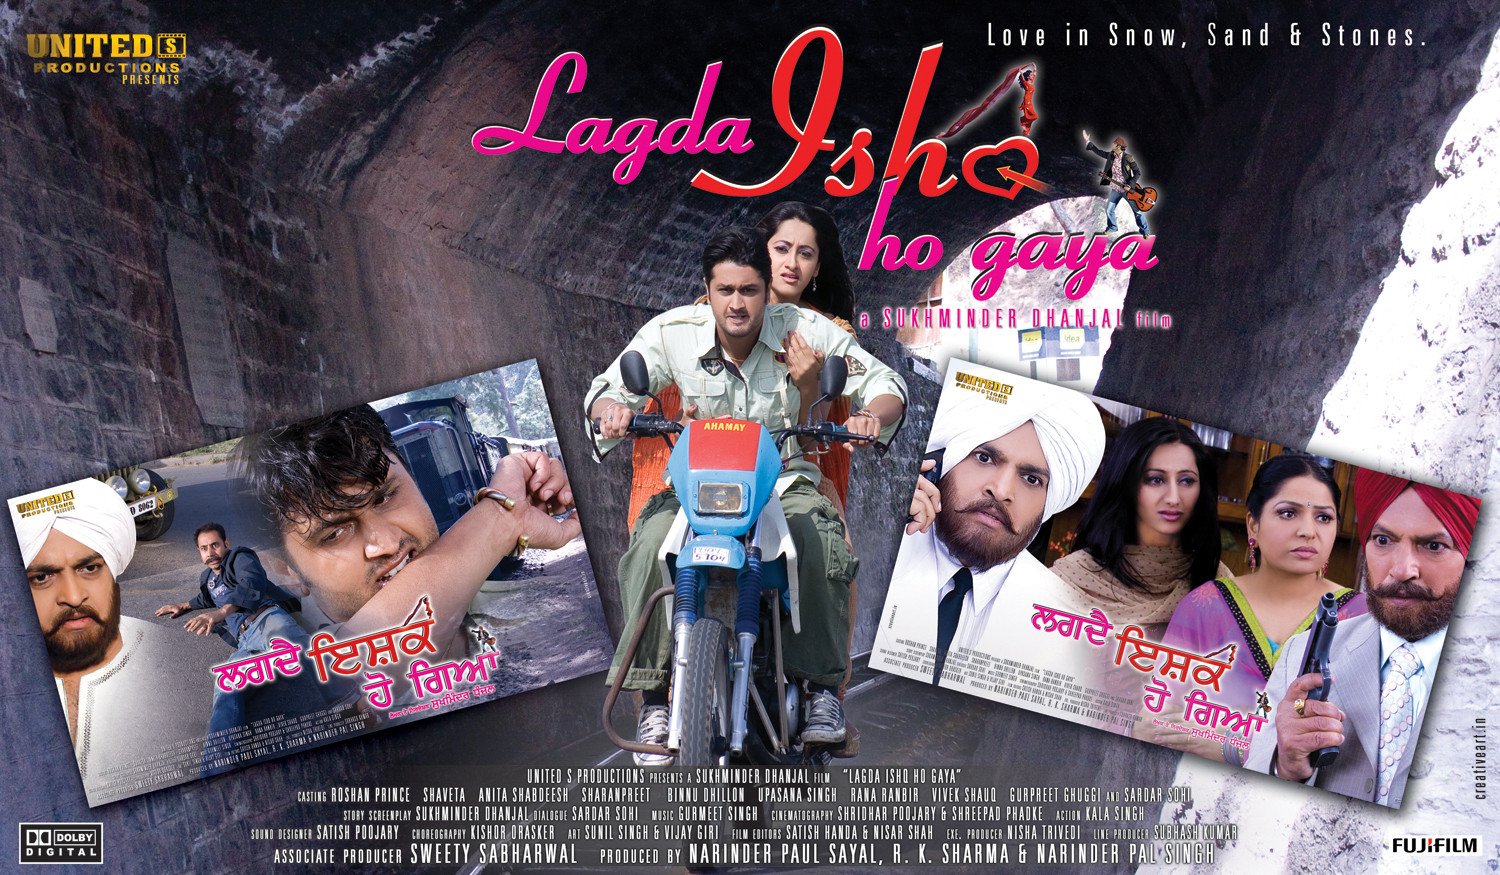 Extra Large Movie Poster Image for Lagda Ishq Ho Gaya (#7 of 11)